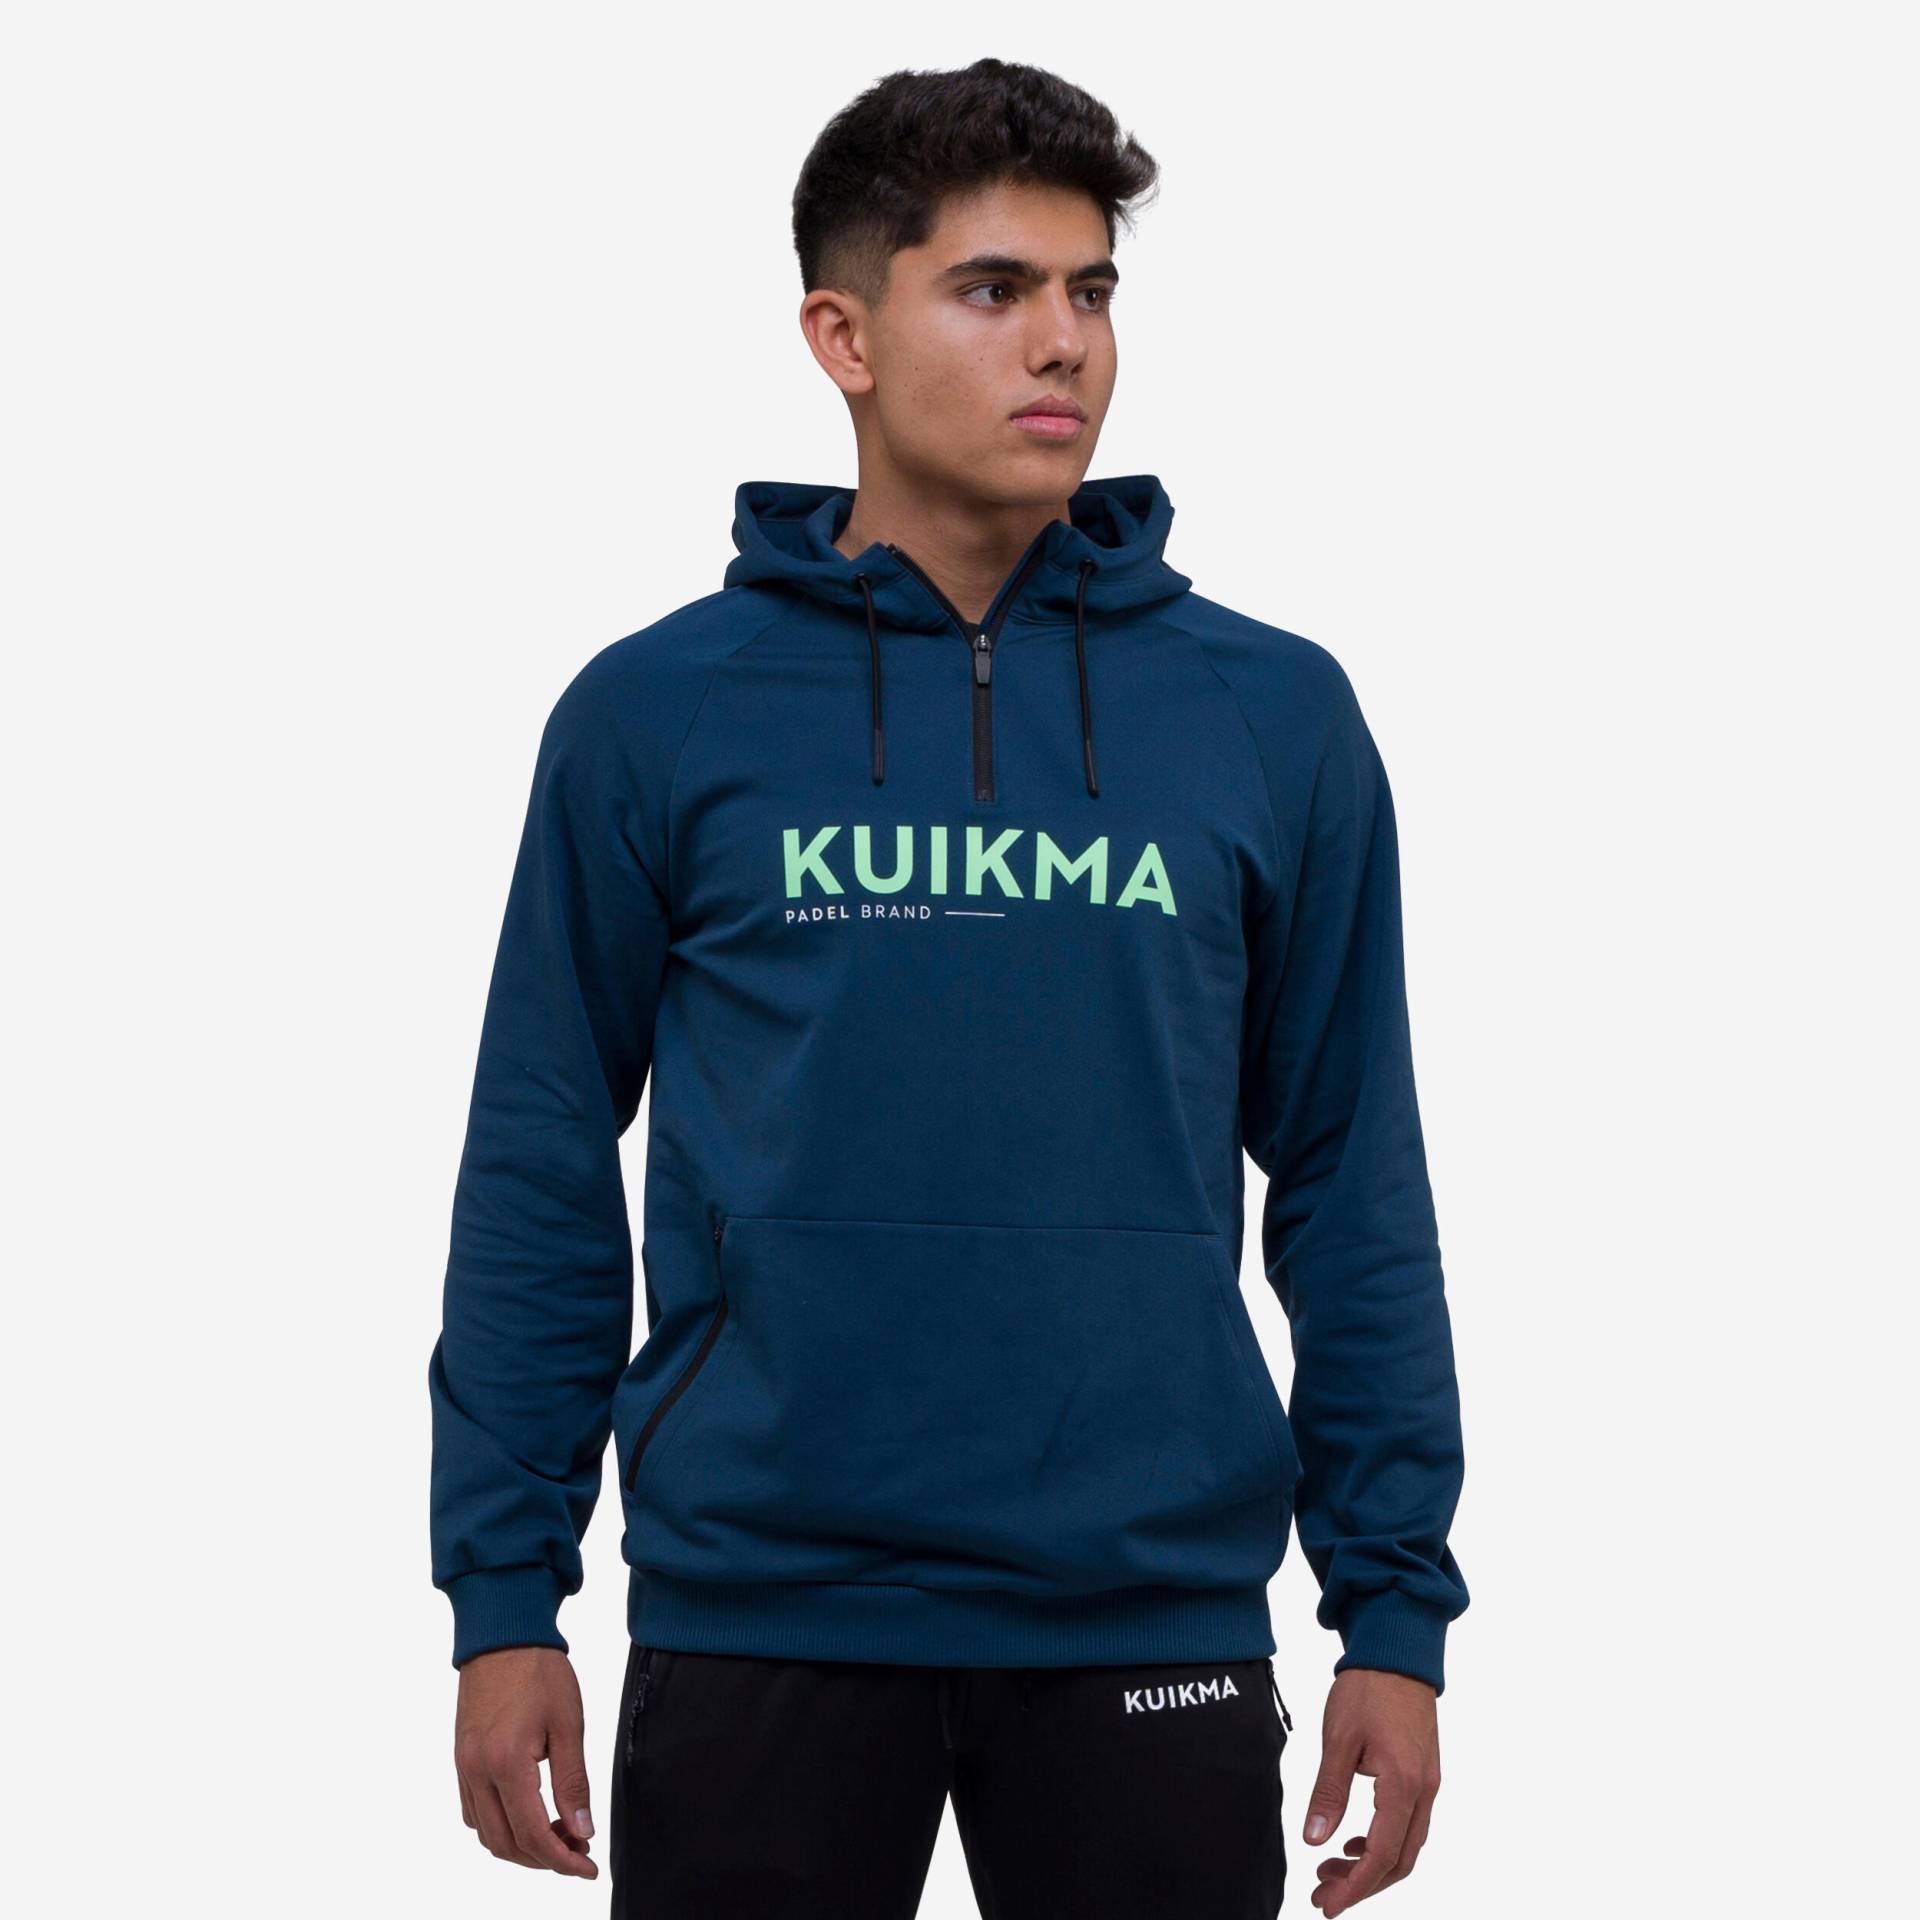 Erwachsene Unisex Padel-Sweatshirt atmungsaktiv warm - Kuikma Club von KUIKMA